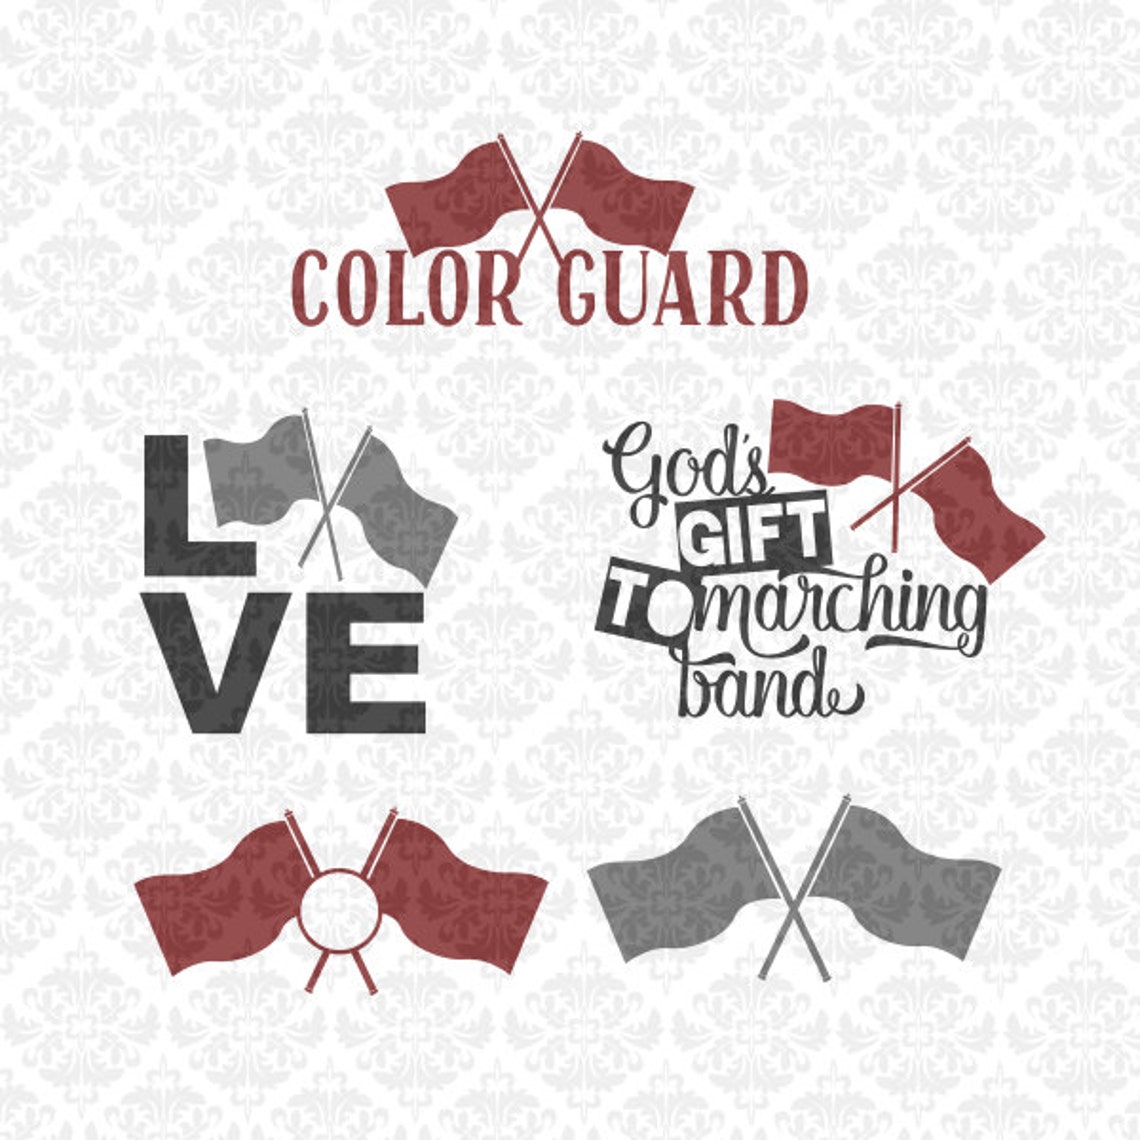 Color guard senior gift ideas